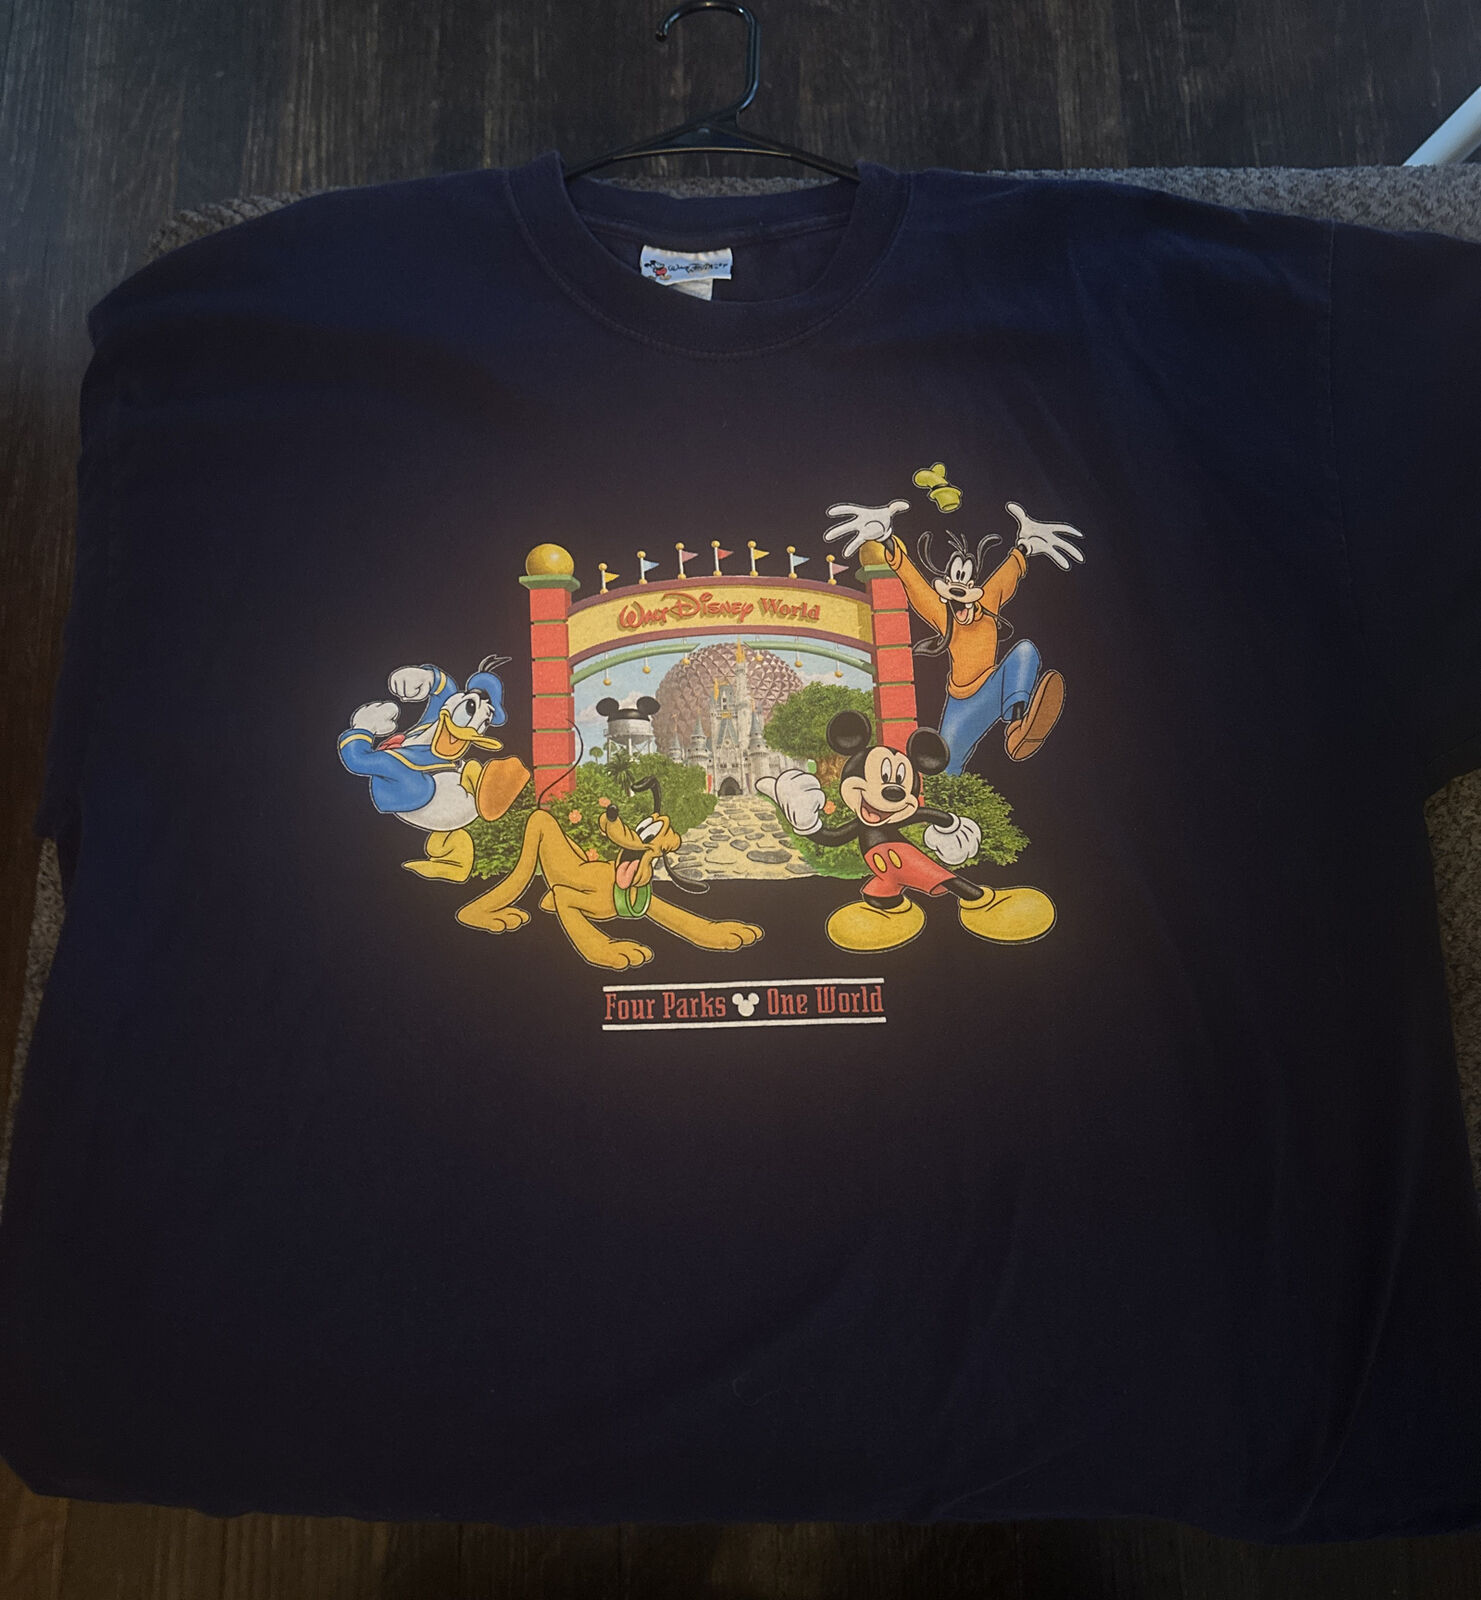 Vintage Rare Walt Disney World FOUR PARKS ONE WORLD Navy Blue T-Shirt Size XL